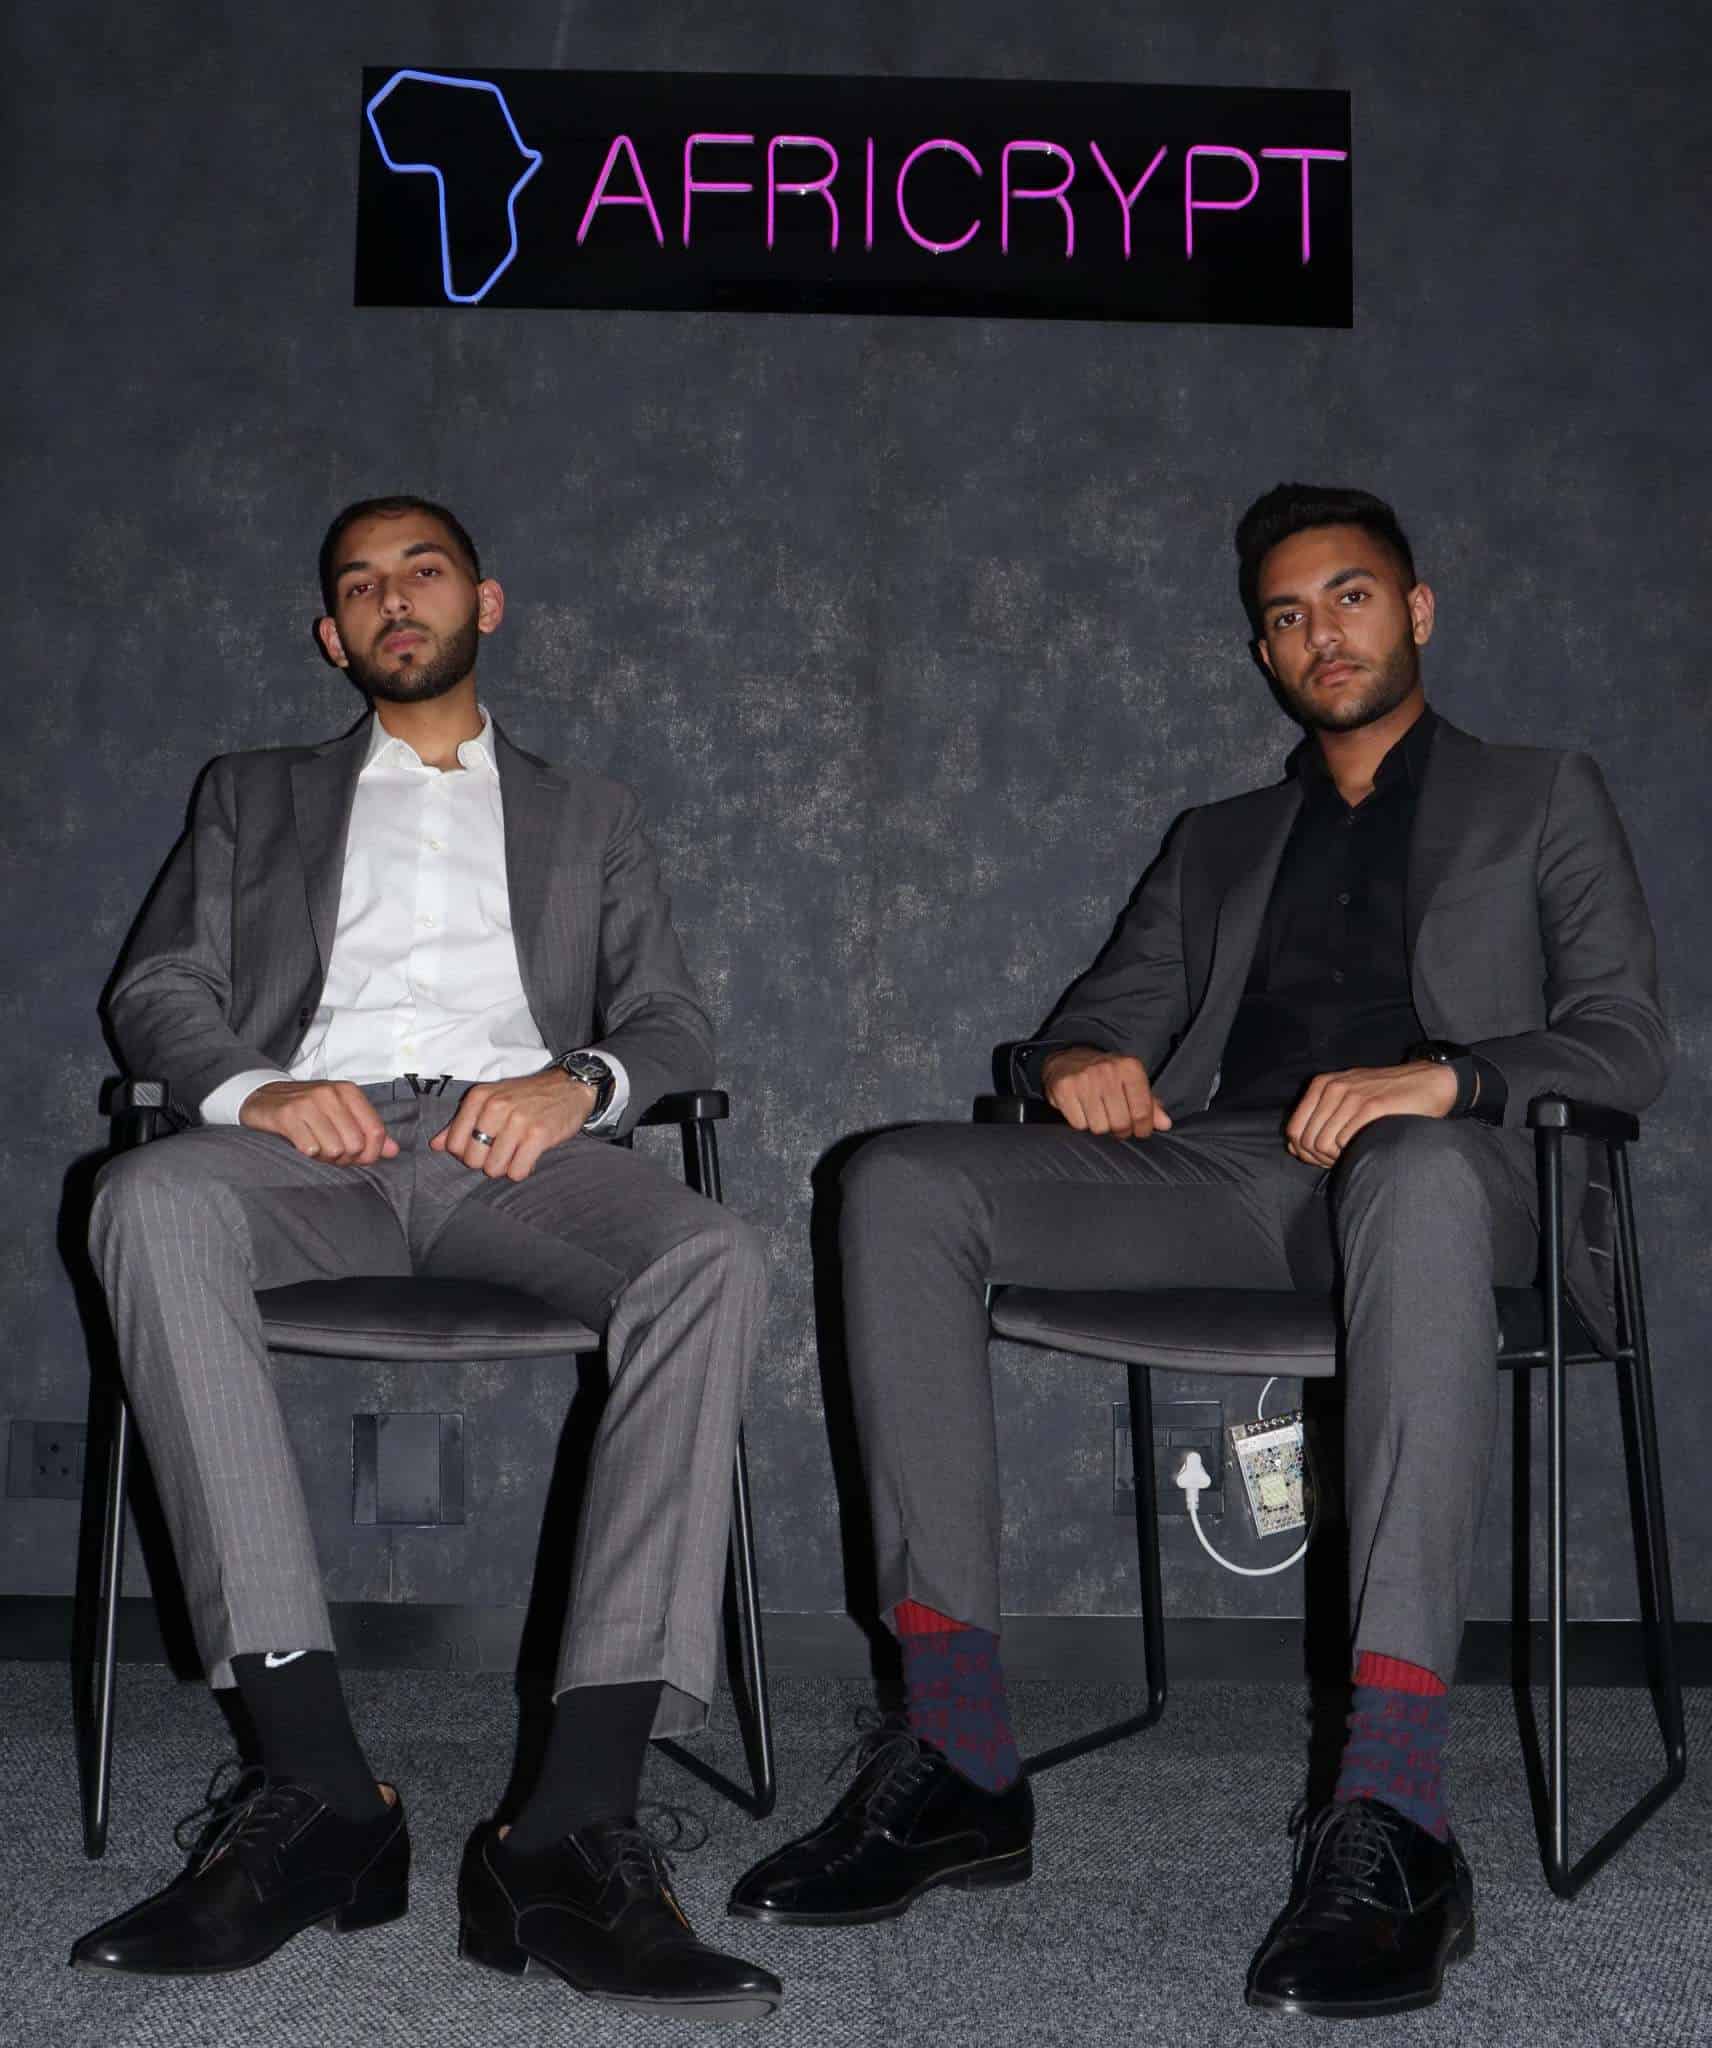 Africrypt: Cajee brothers vanish with $3.6 billion (R54 billion) as bitcoin ponzi scam collapses